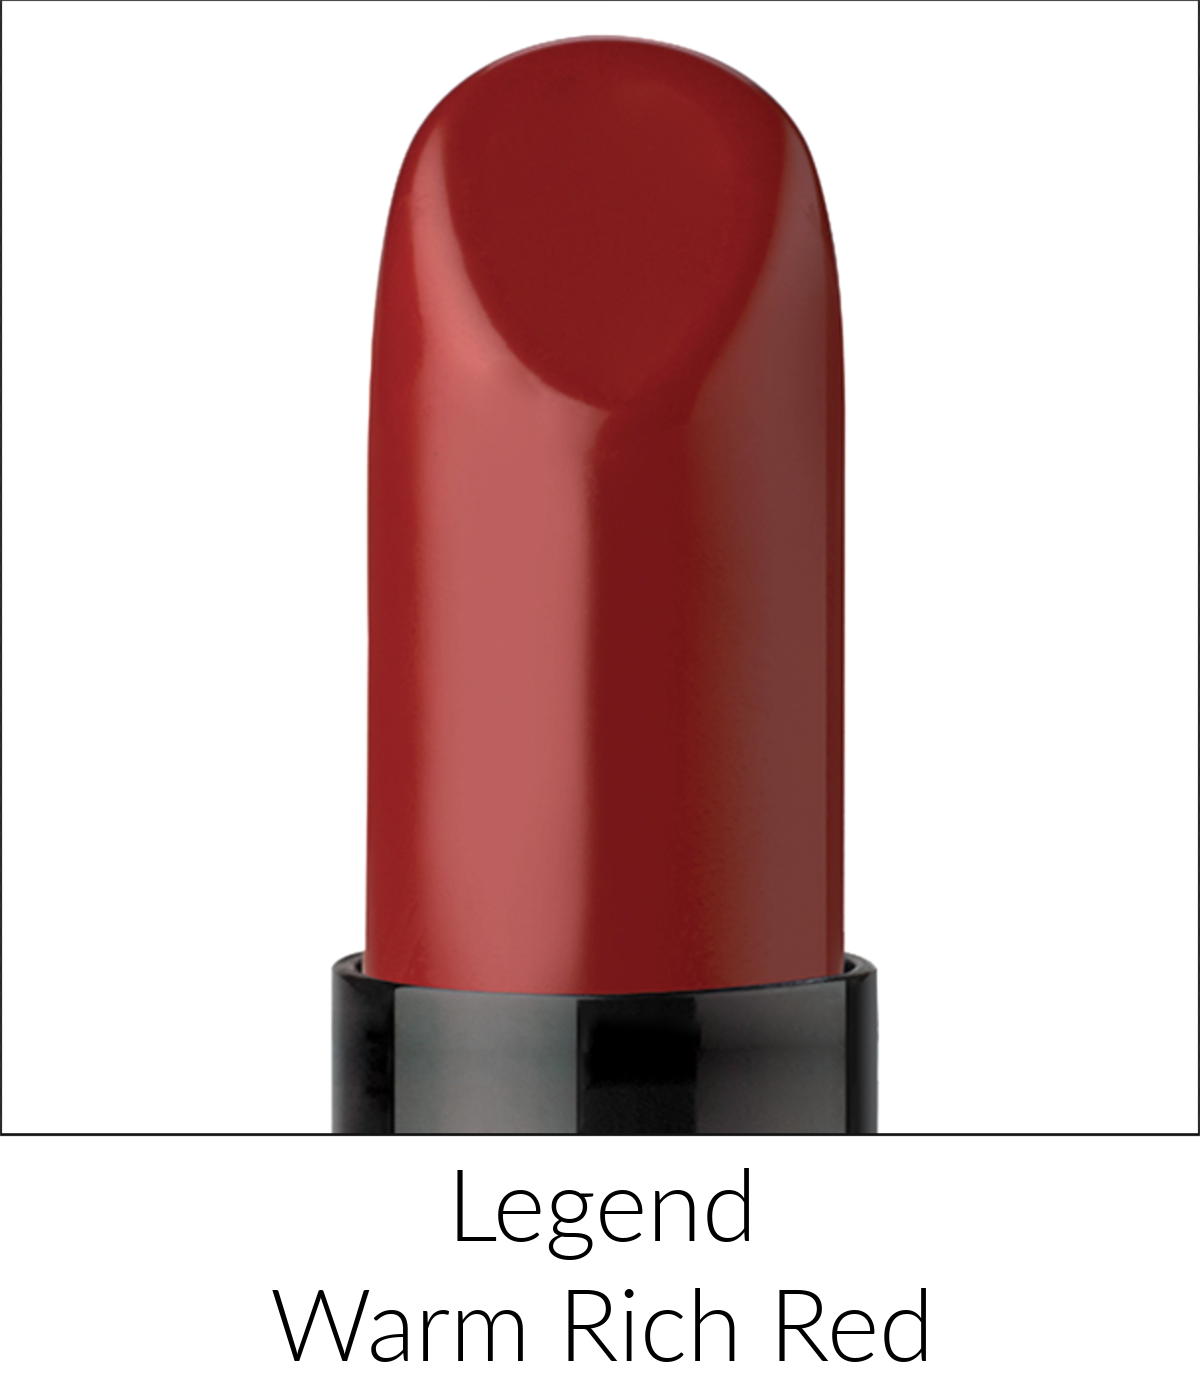 LTW Legend warm red lipstick color swatch